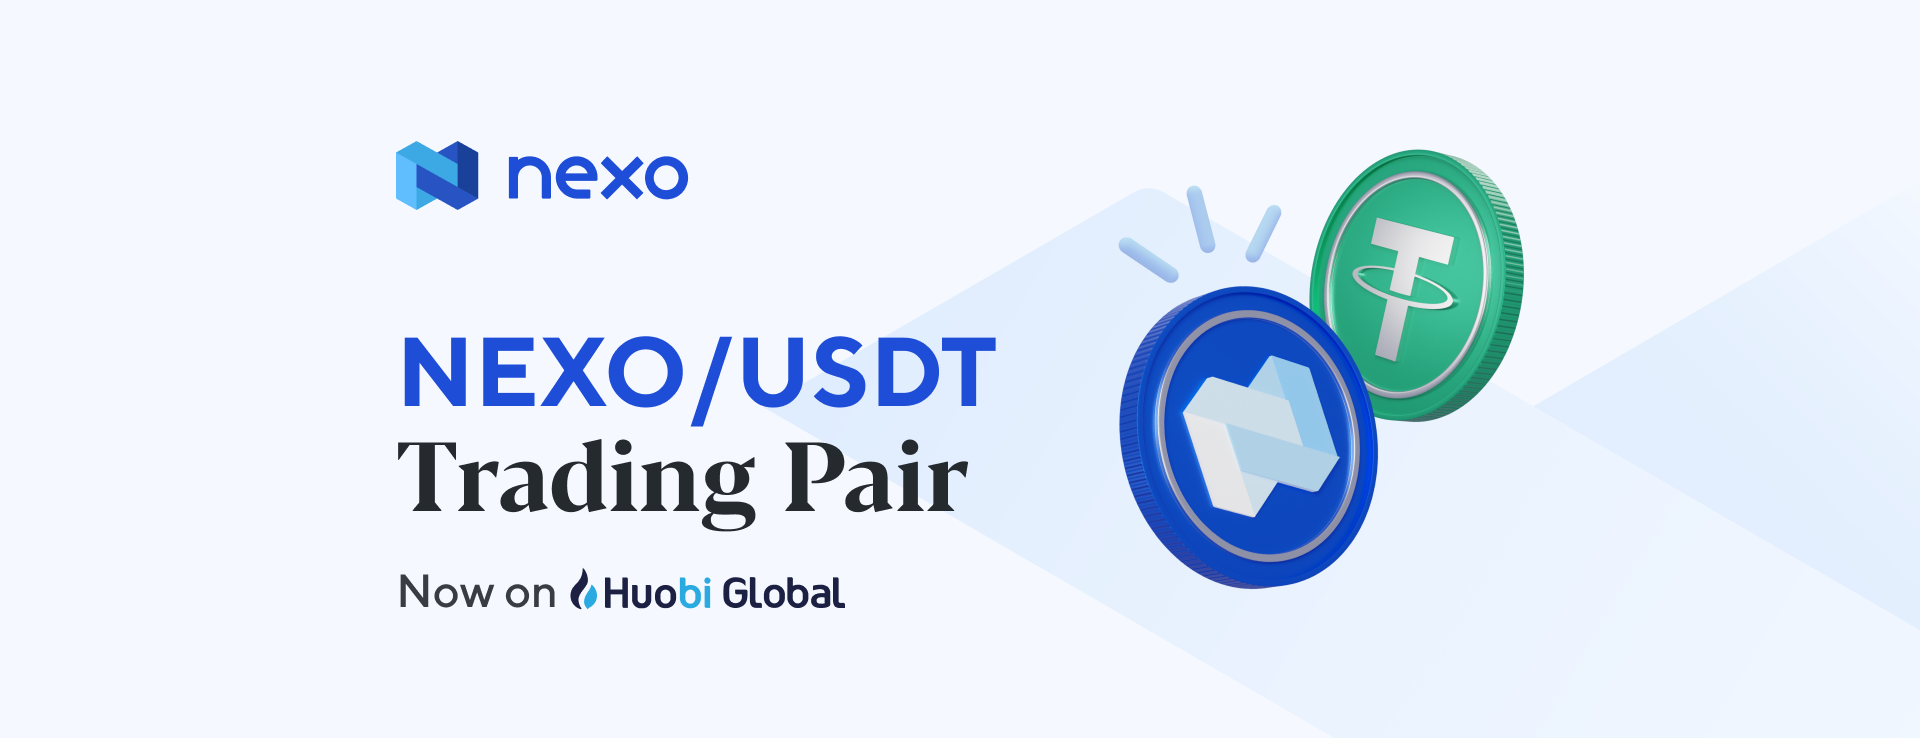 NEXO + USDT = Trading Pair